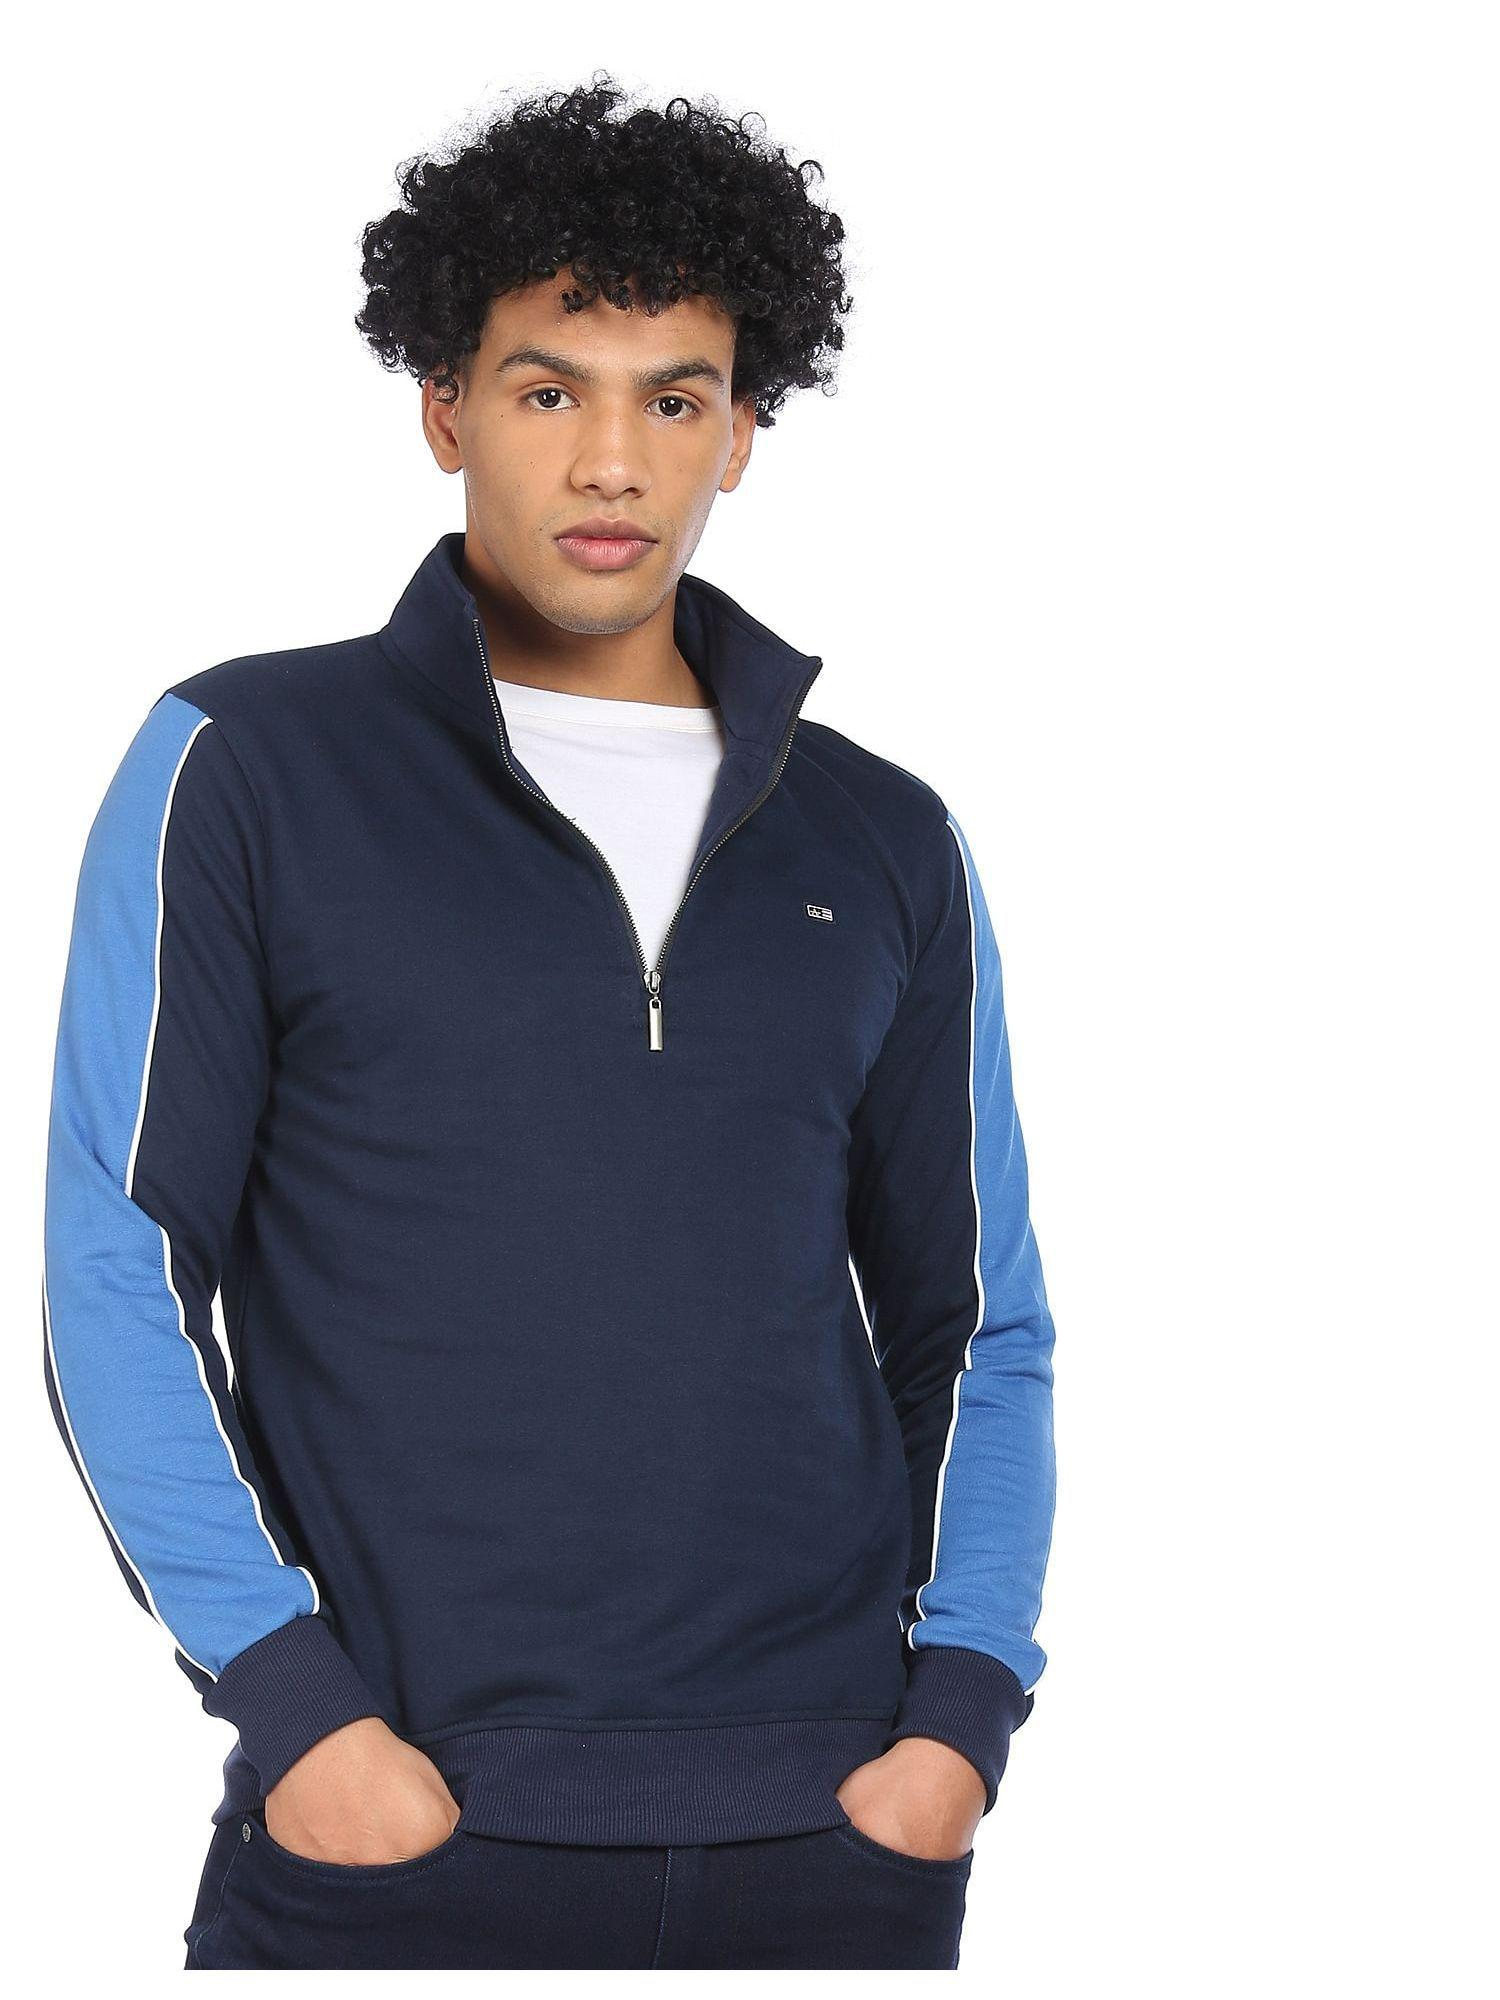 men navy blue long sleeve high neck sweatshirt